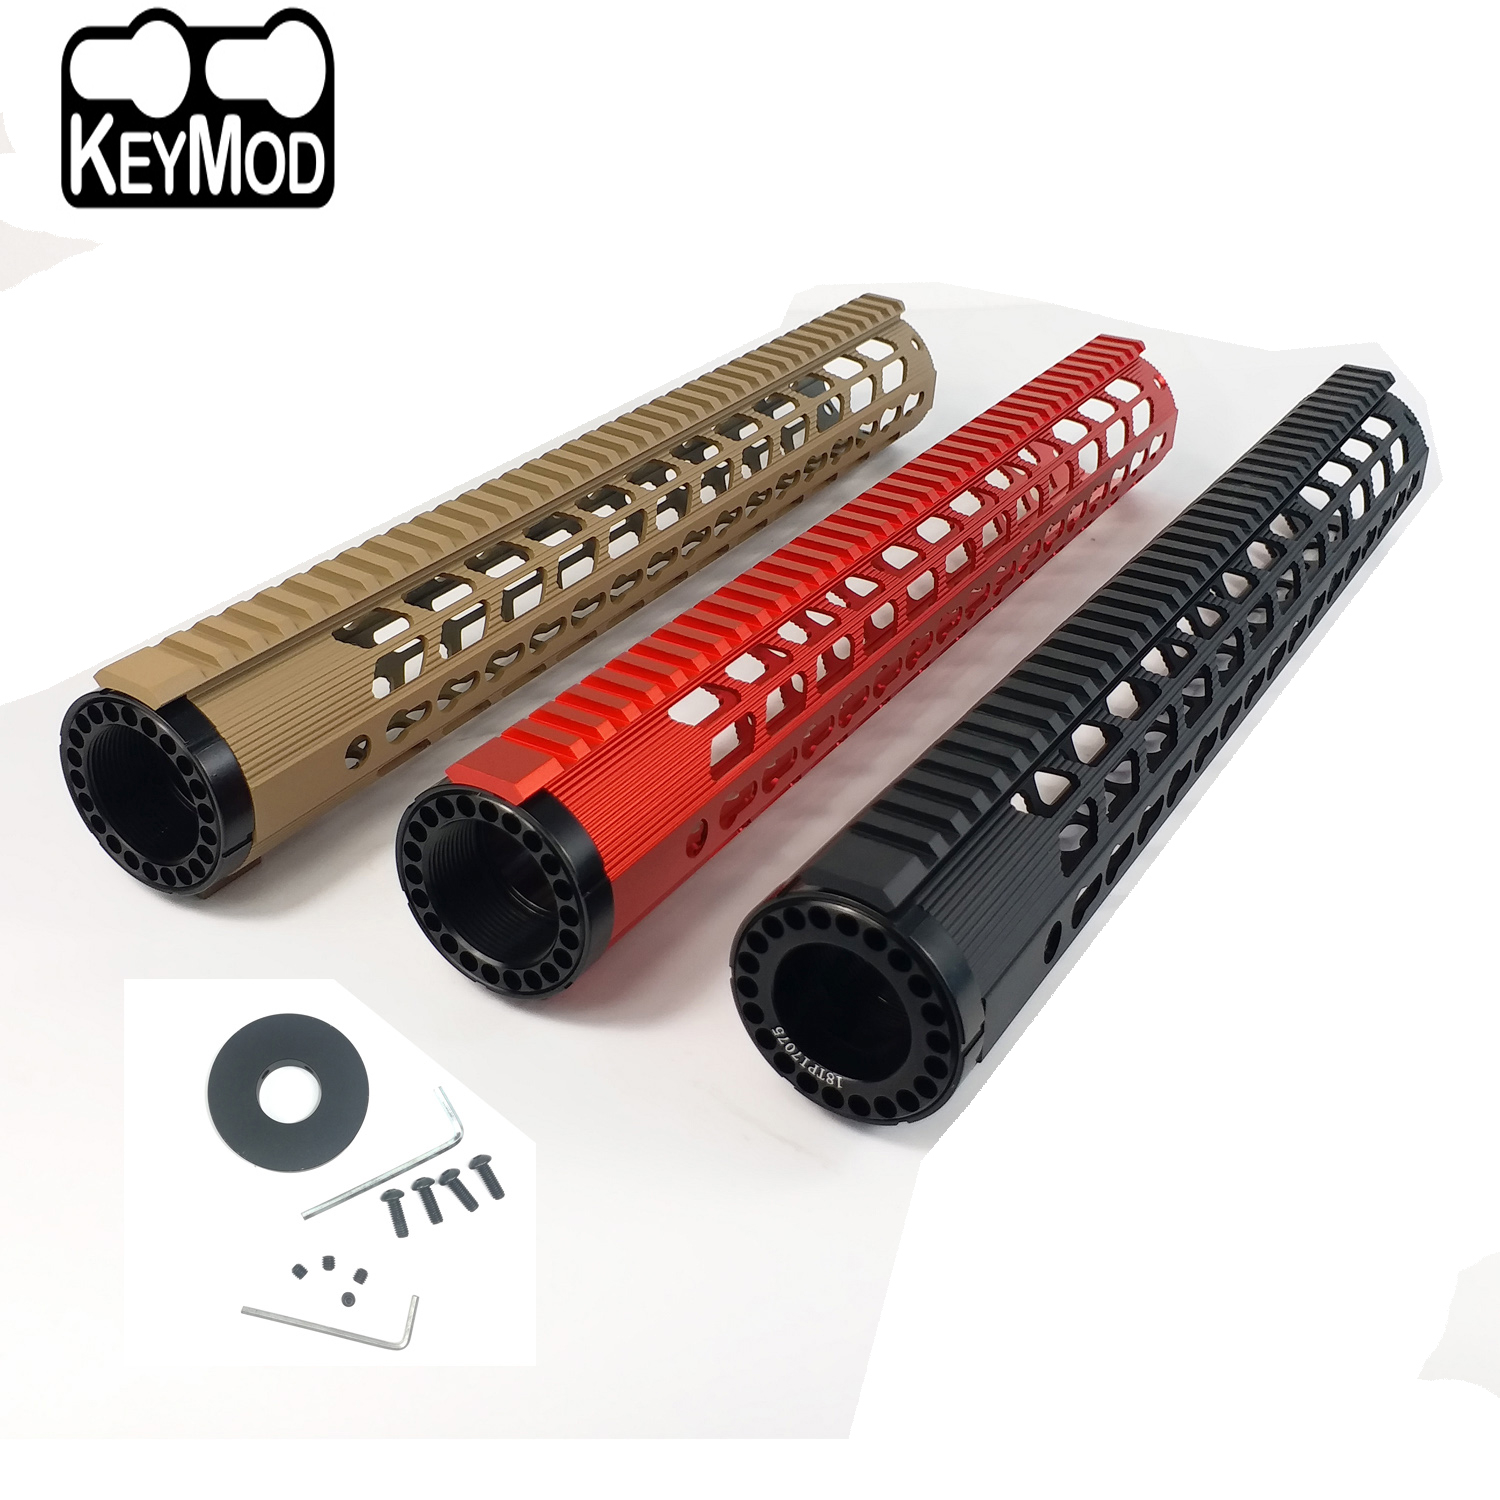 15 Inch Keymod Handguard Rail Picatinny Rail Mount System Fits .308/7.62(AR10) Spec Black/Tan/Red color LRK308-x